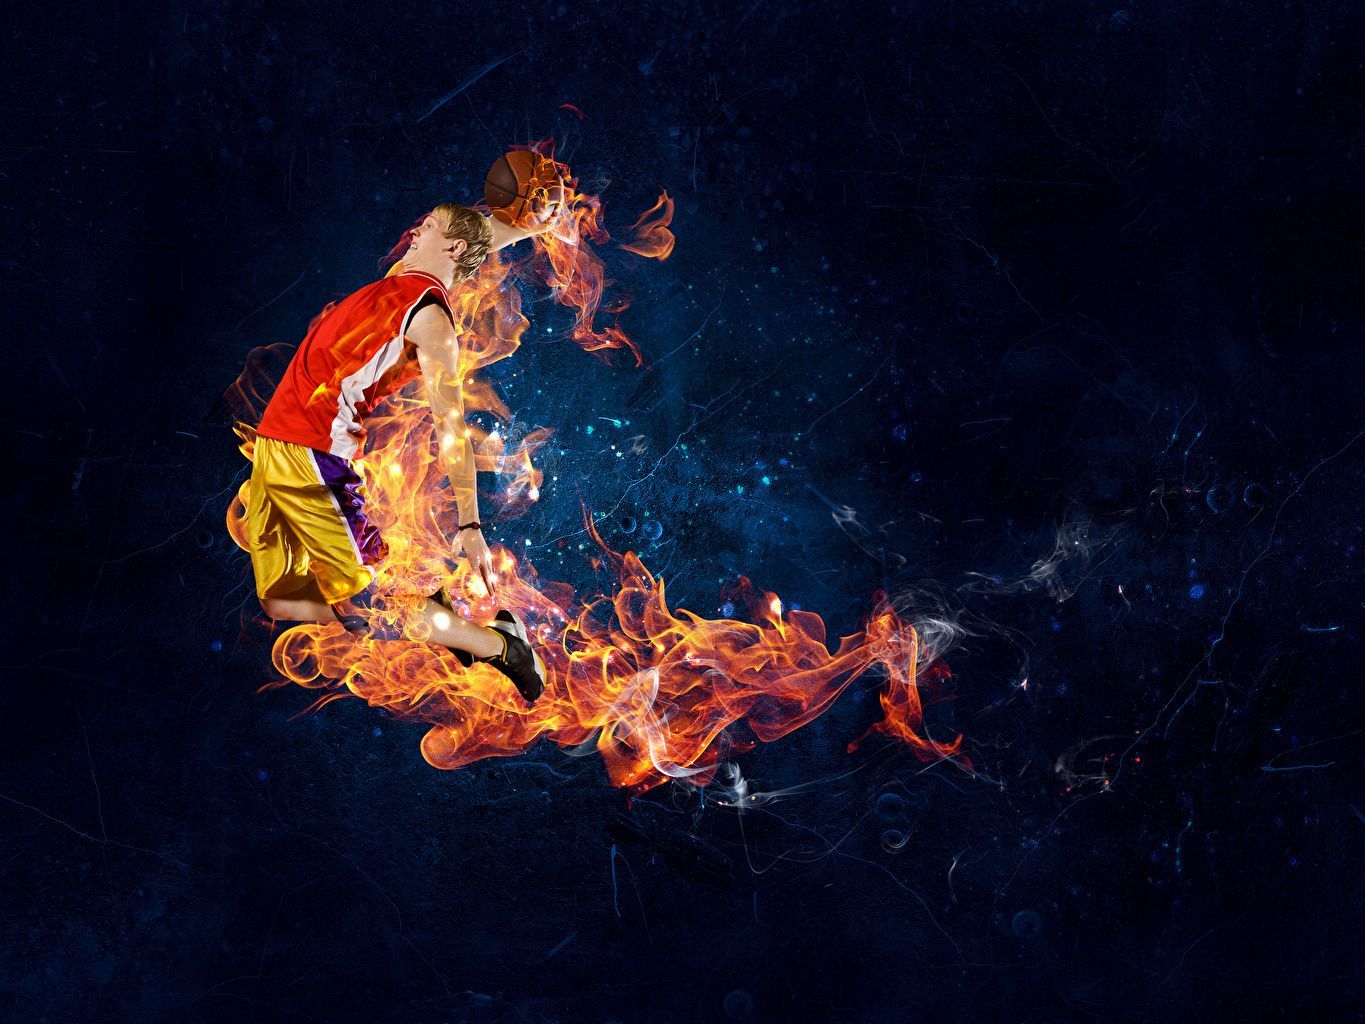 Basketball Background Fire Illustration Stock Photo 293512568  Shutterstock